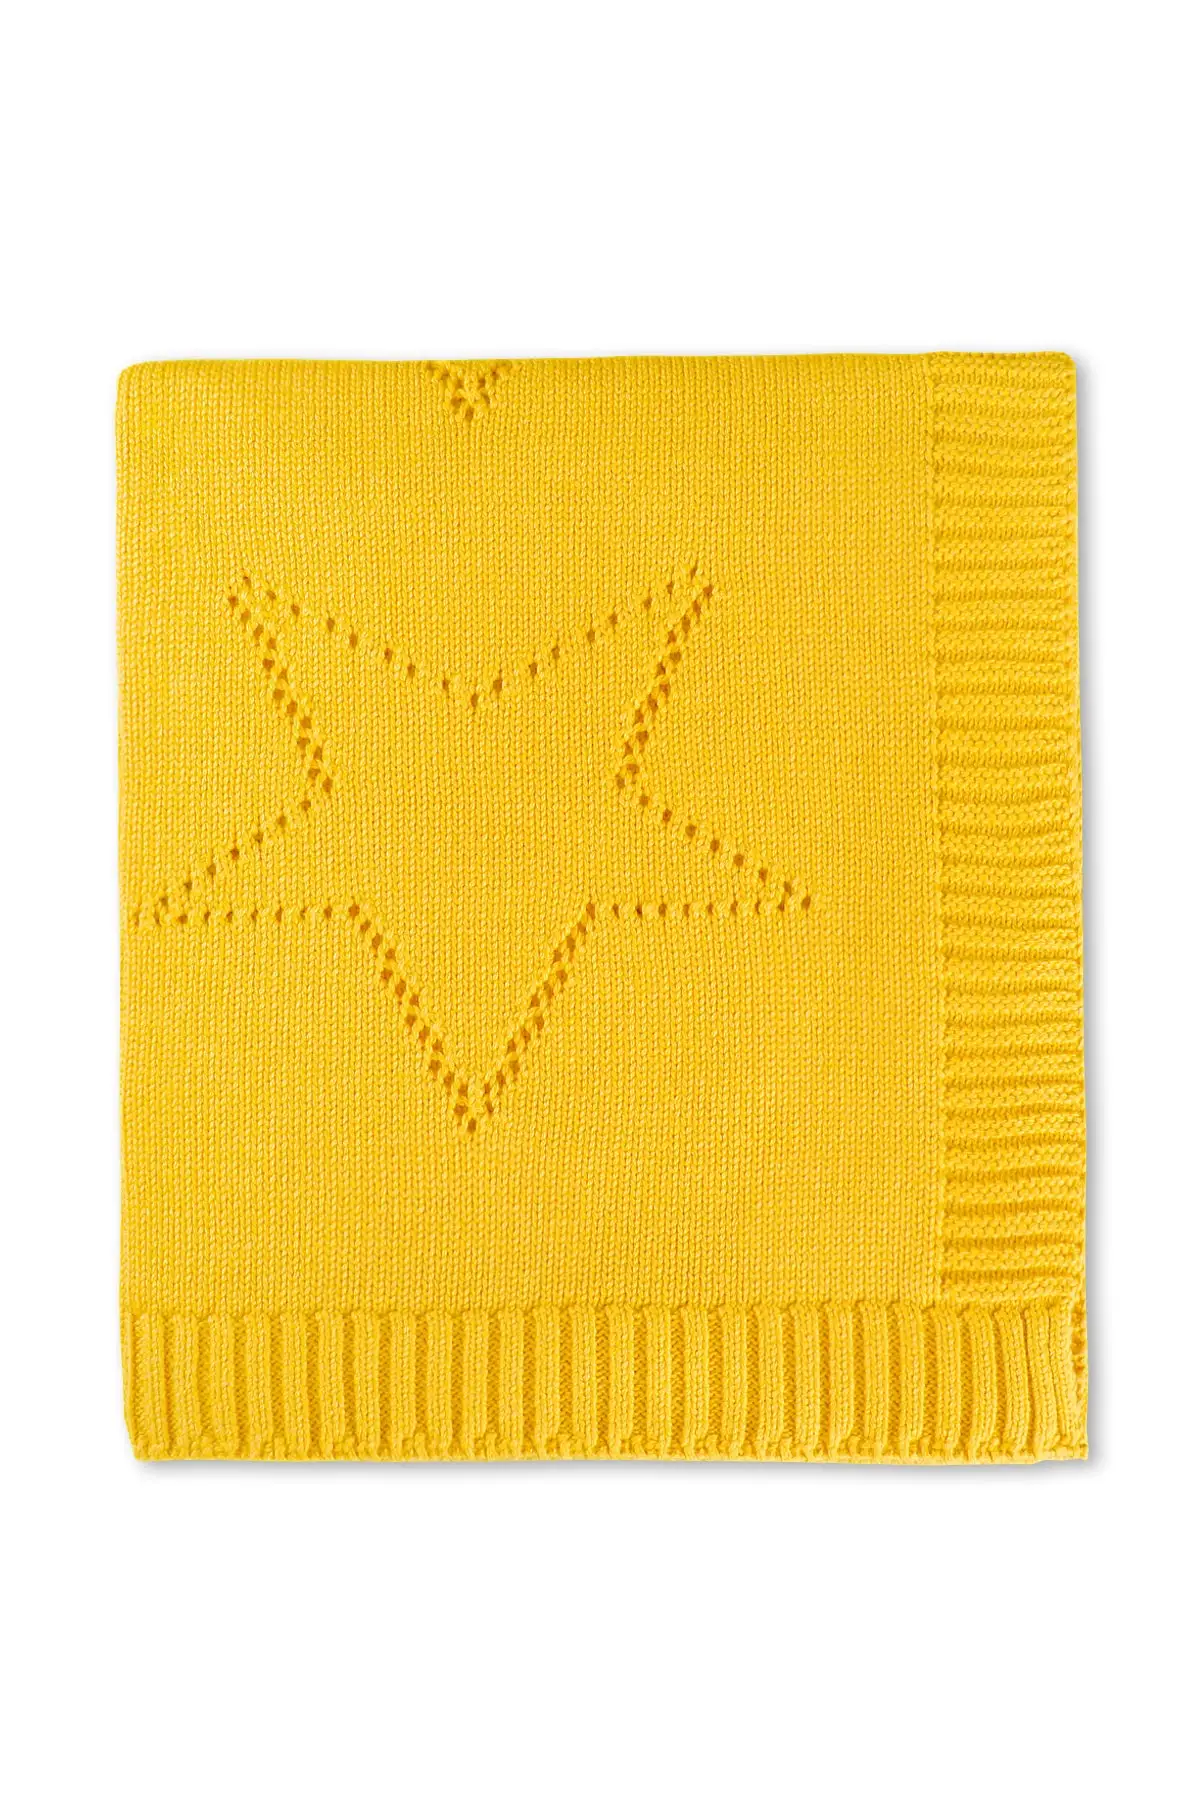 Stars Mustard Knitwear Blanket Yellow Baby & Kids Blanket Home Textile Textile & Furniture